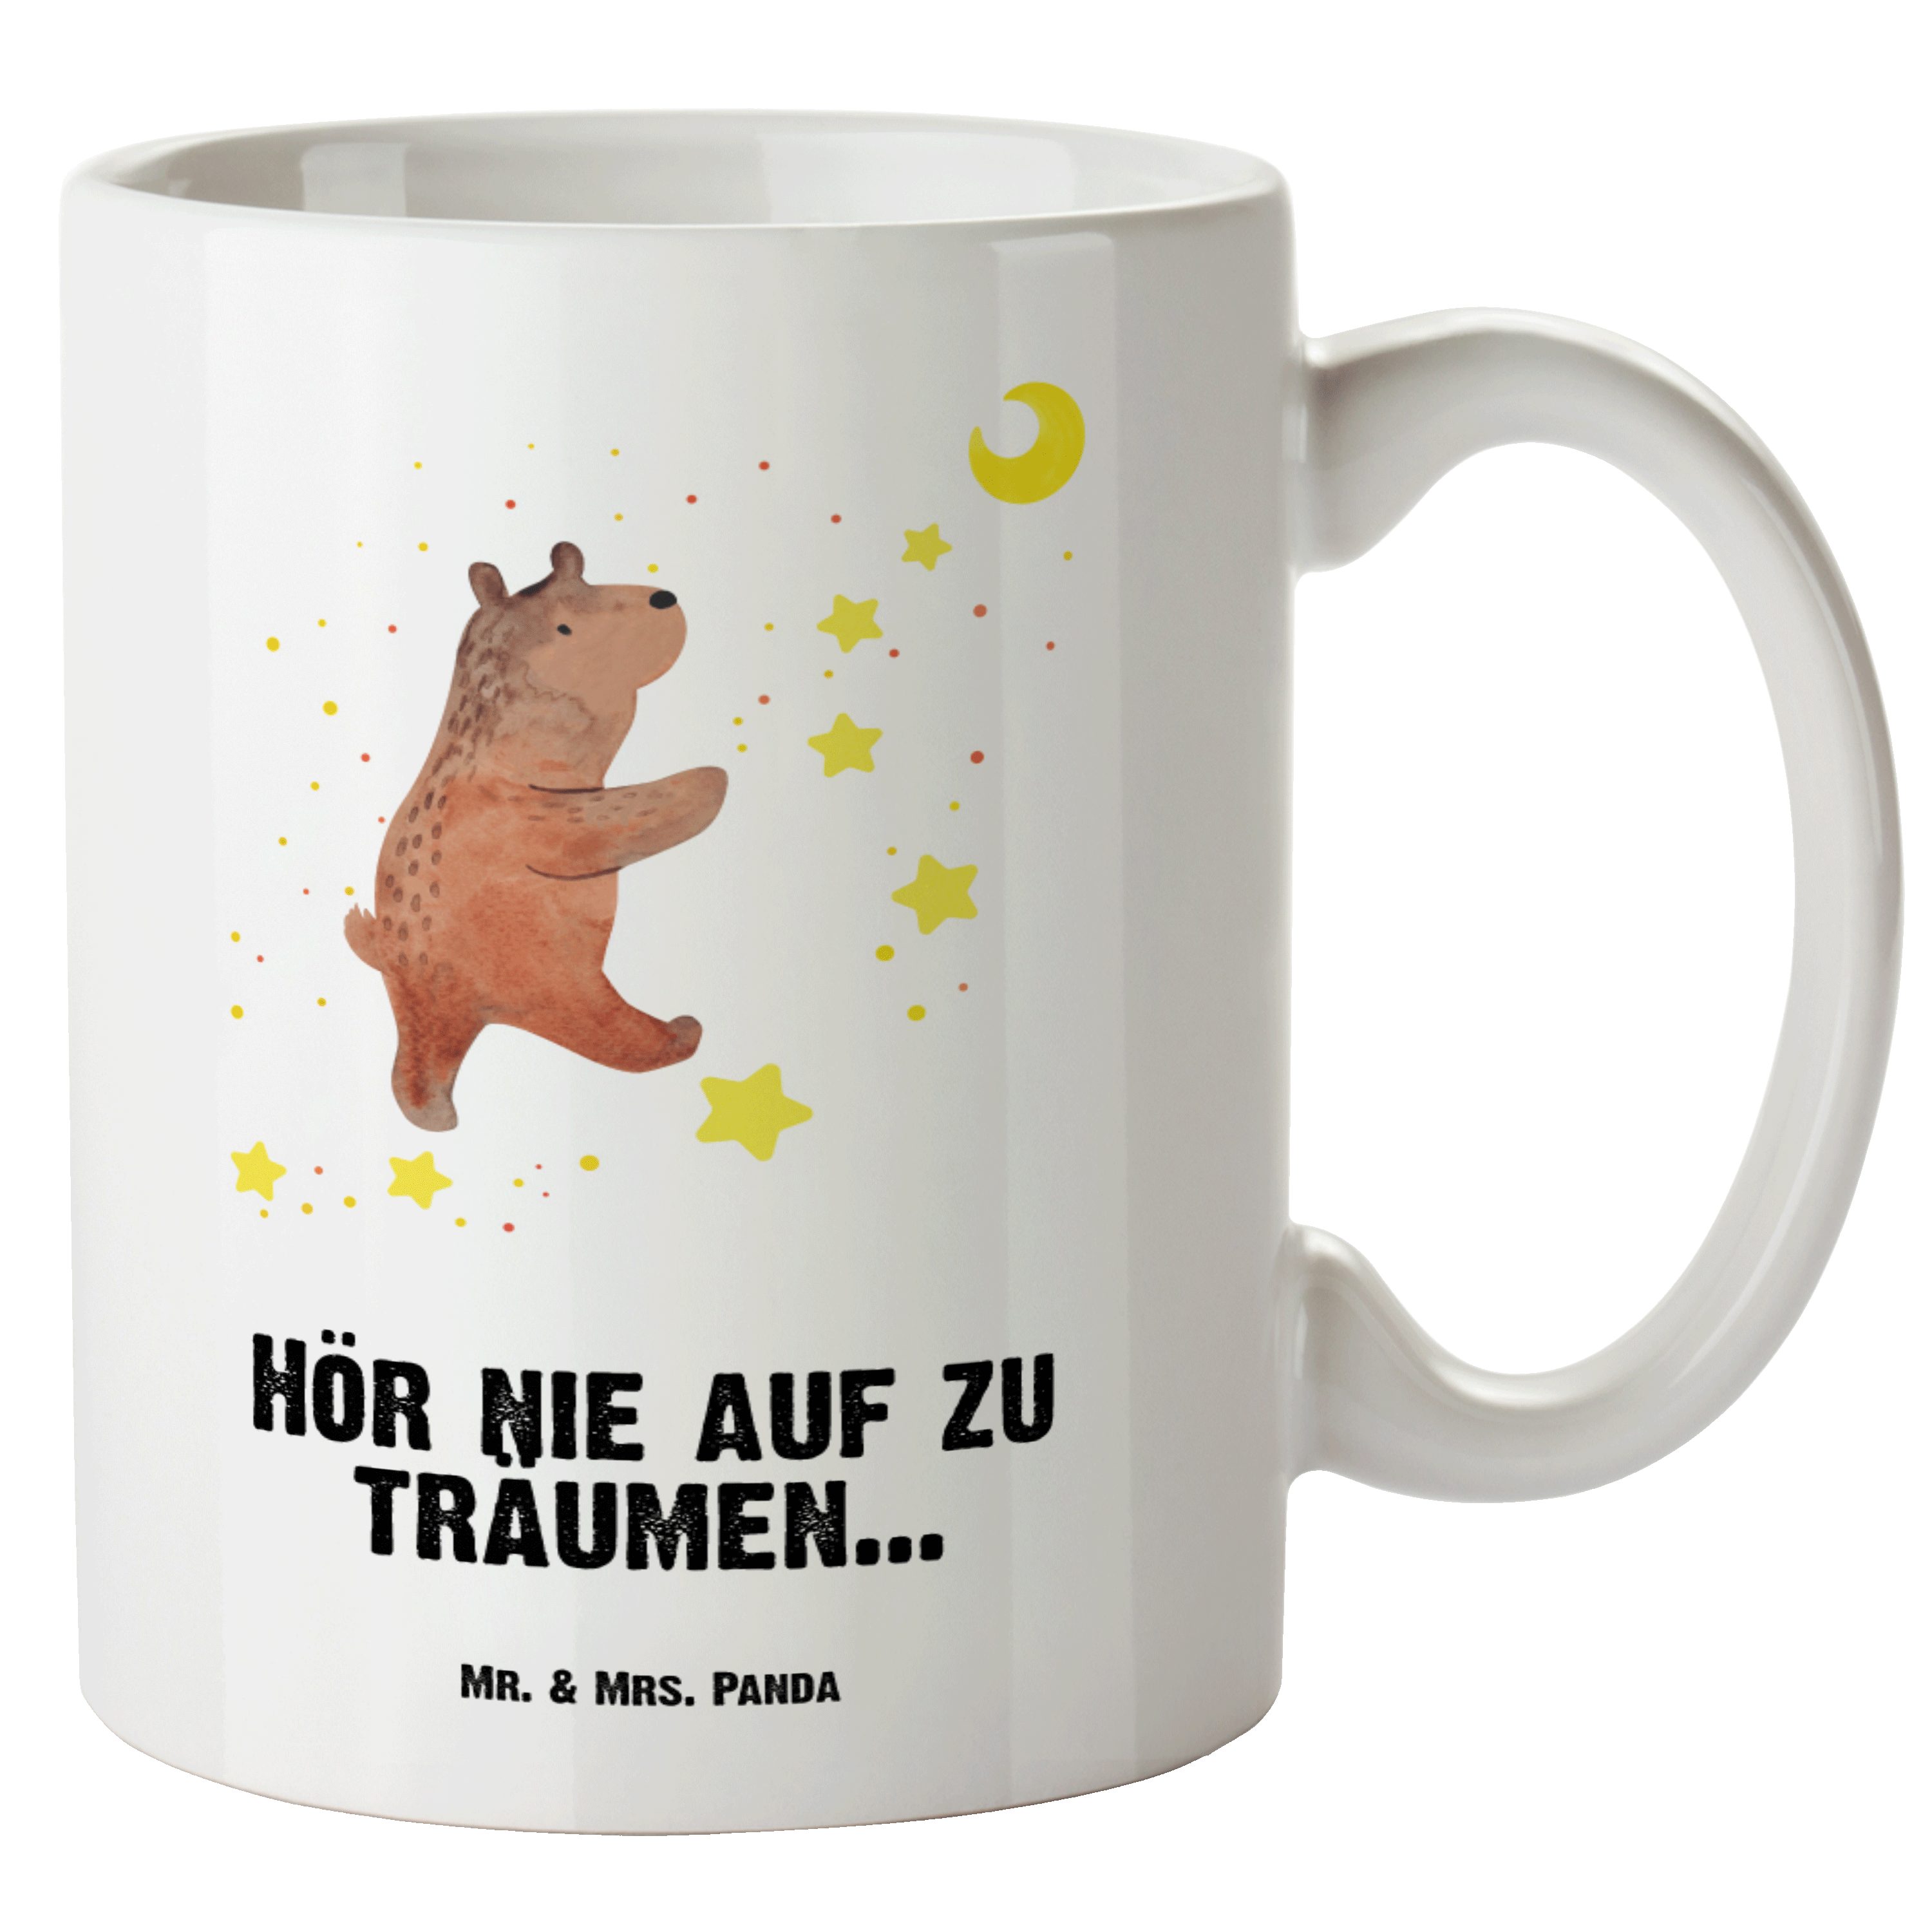 Mr. - Panda Bär Grosse Geschenk, Tasse Weiß Mrs. Tasse Teddybär, Träumen, & Keramik - XL Träume Kaffeetasse,